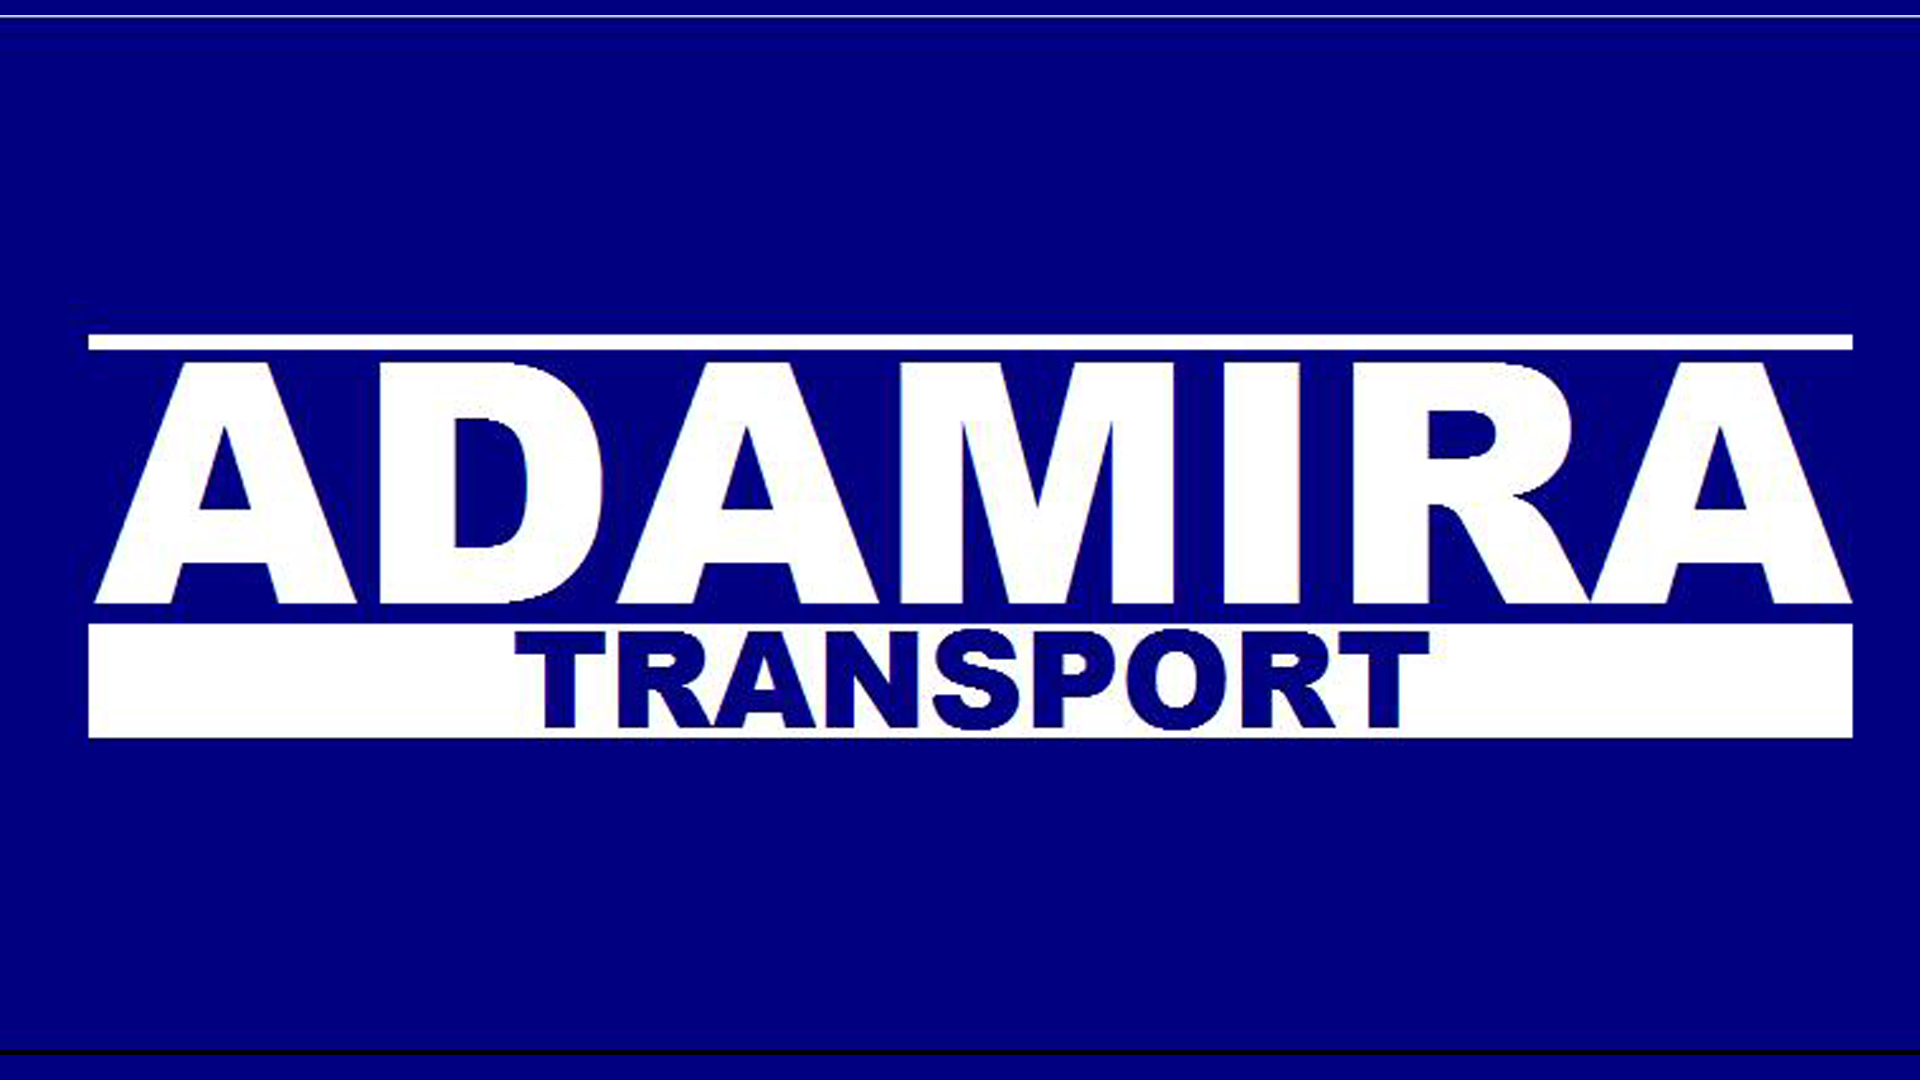 Adamira Transport